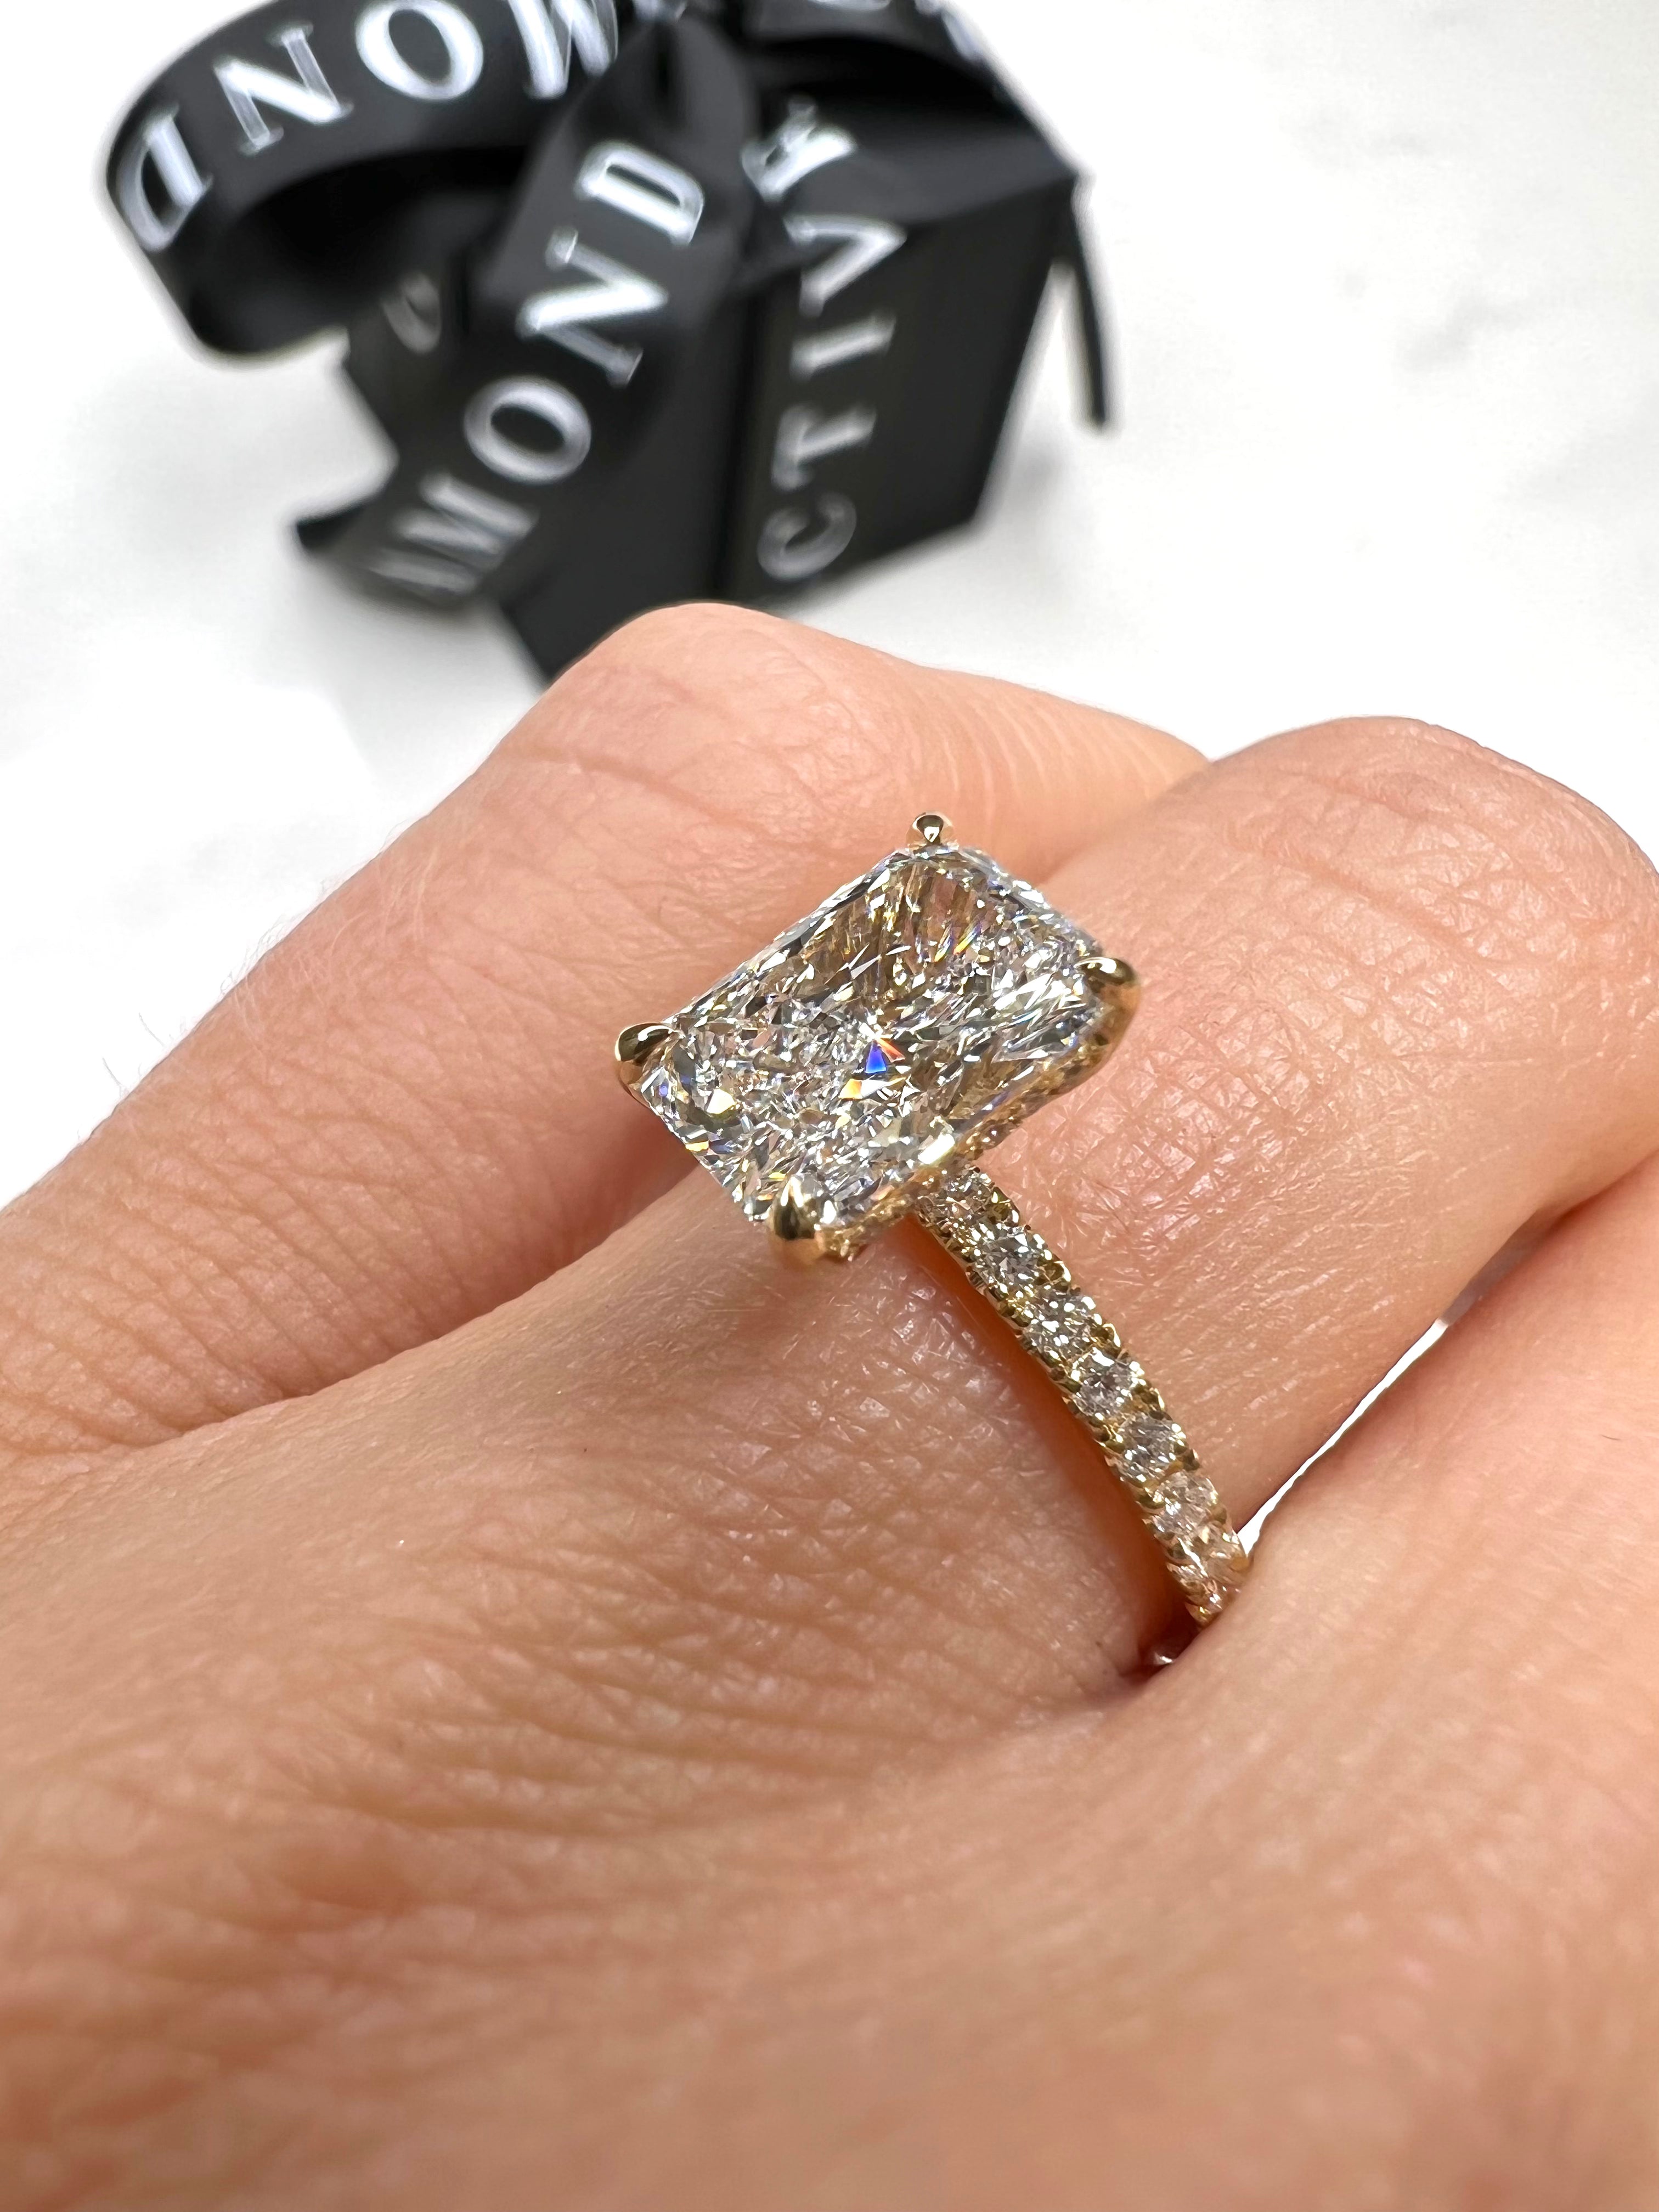 Radiant diamond engagement ring